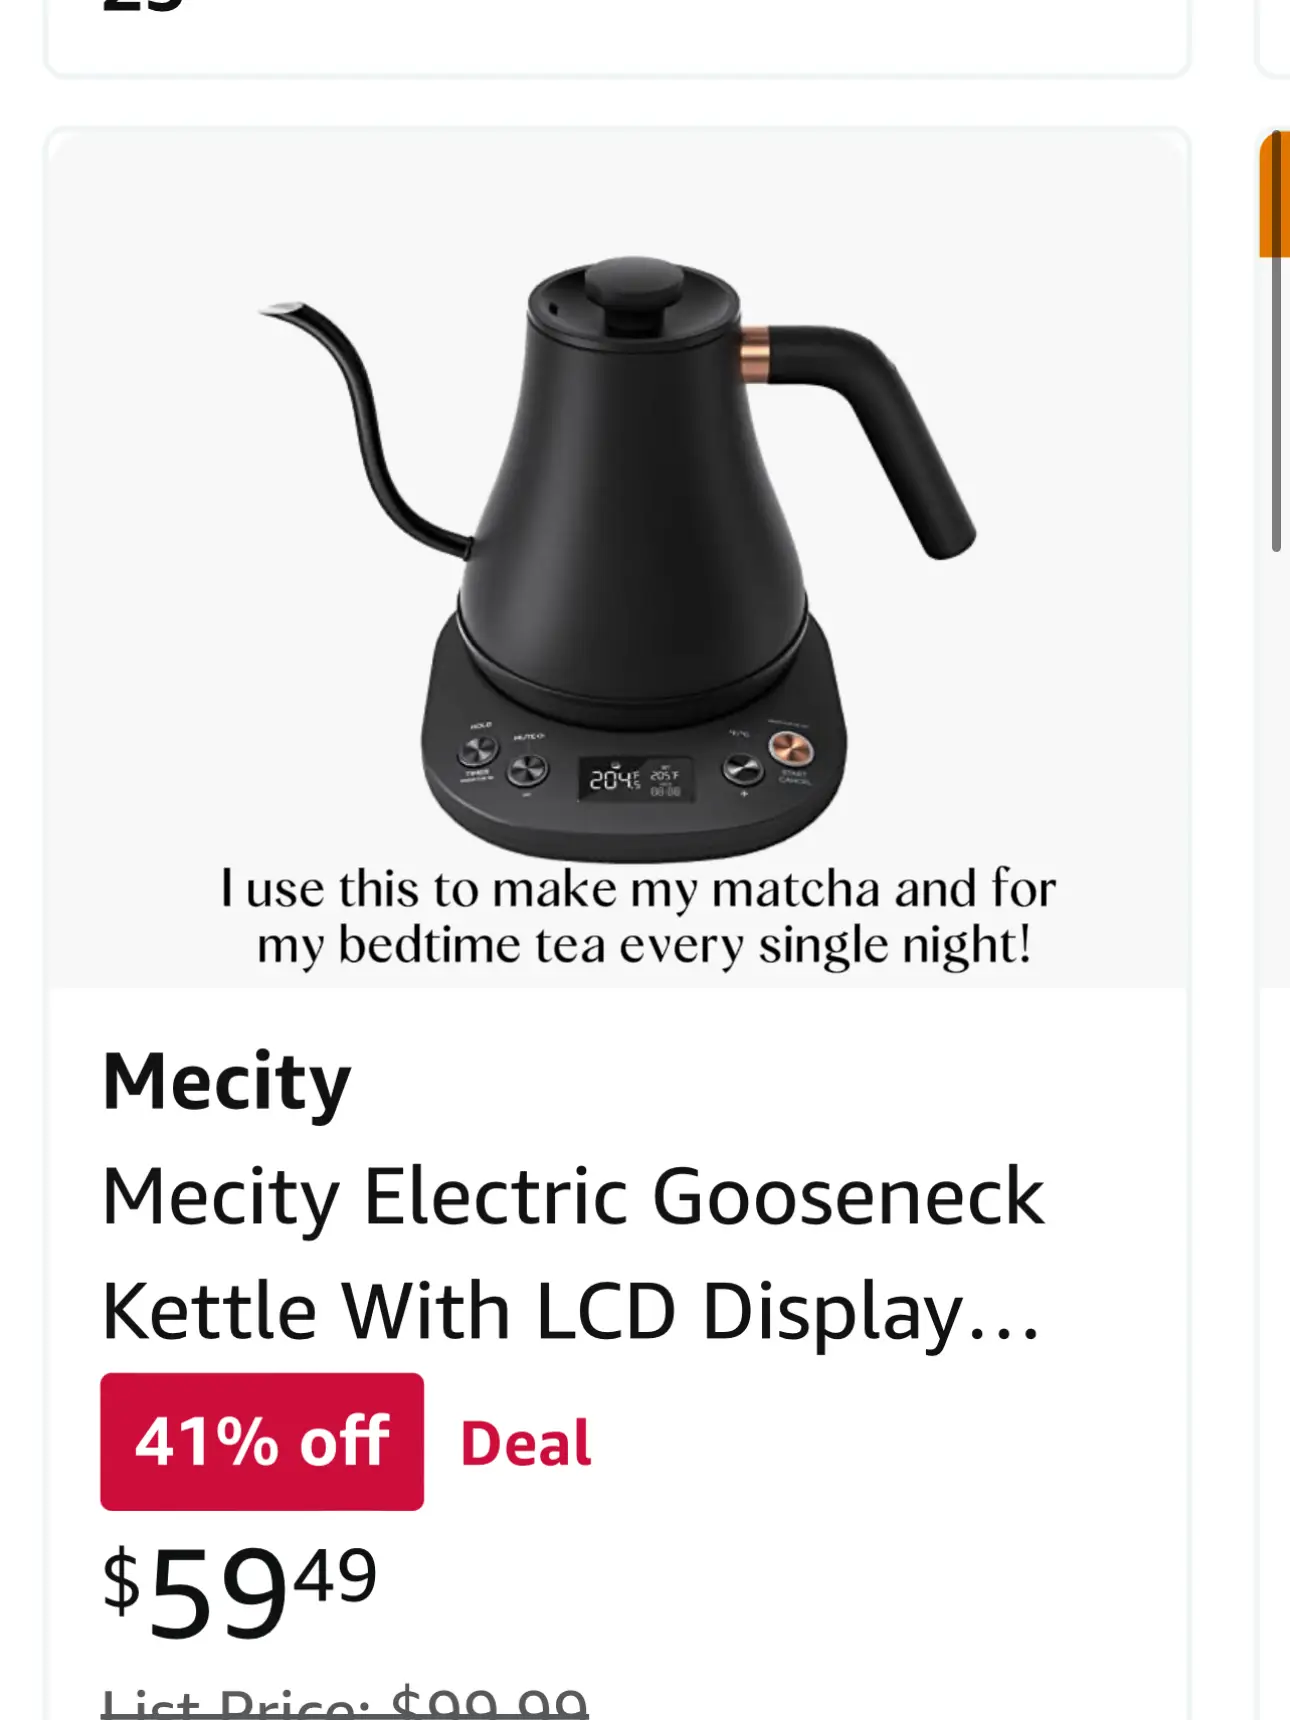 Mecity Electric Gooseneck Kettle Review